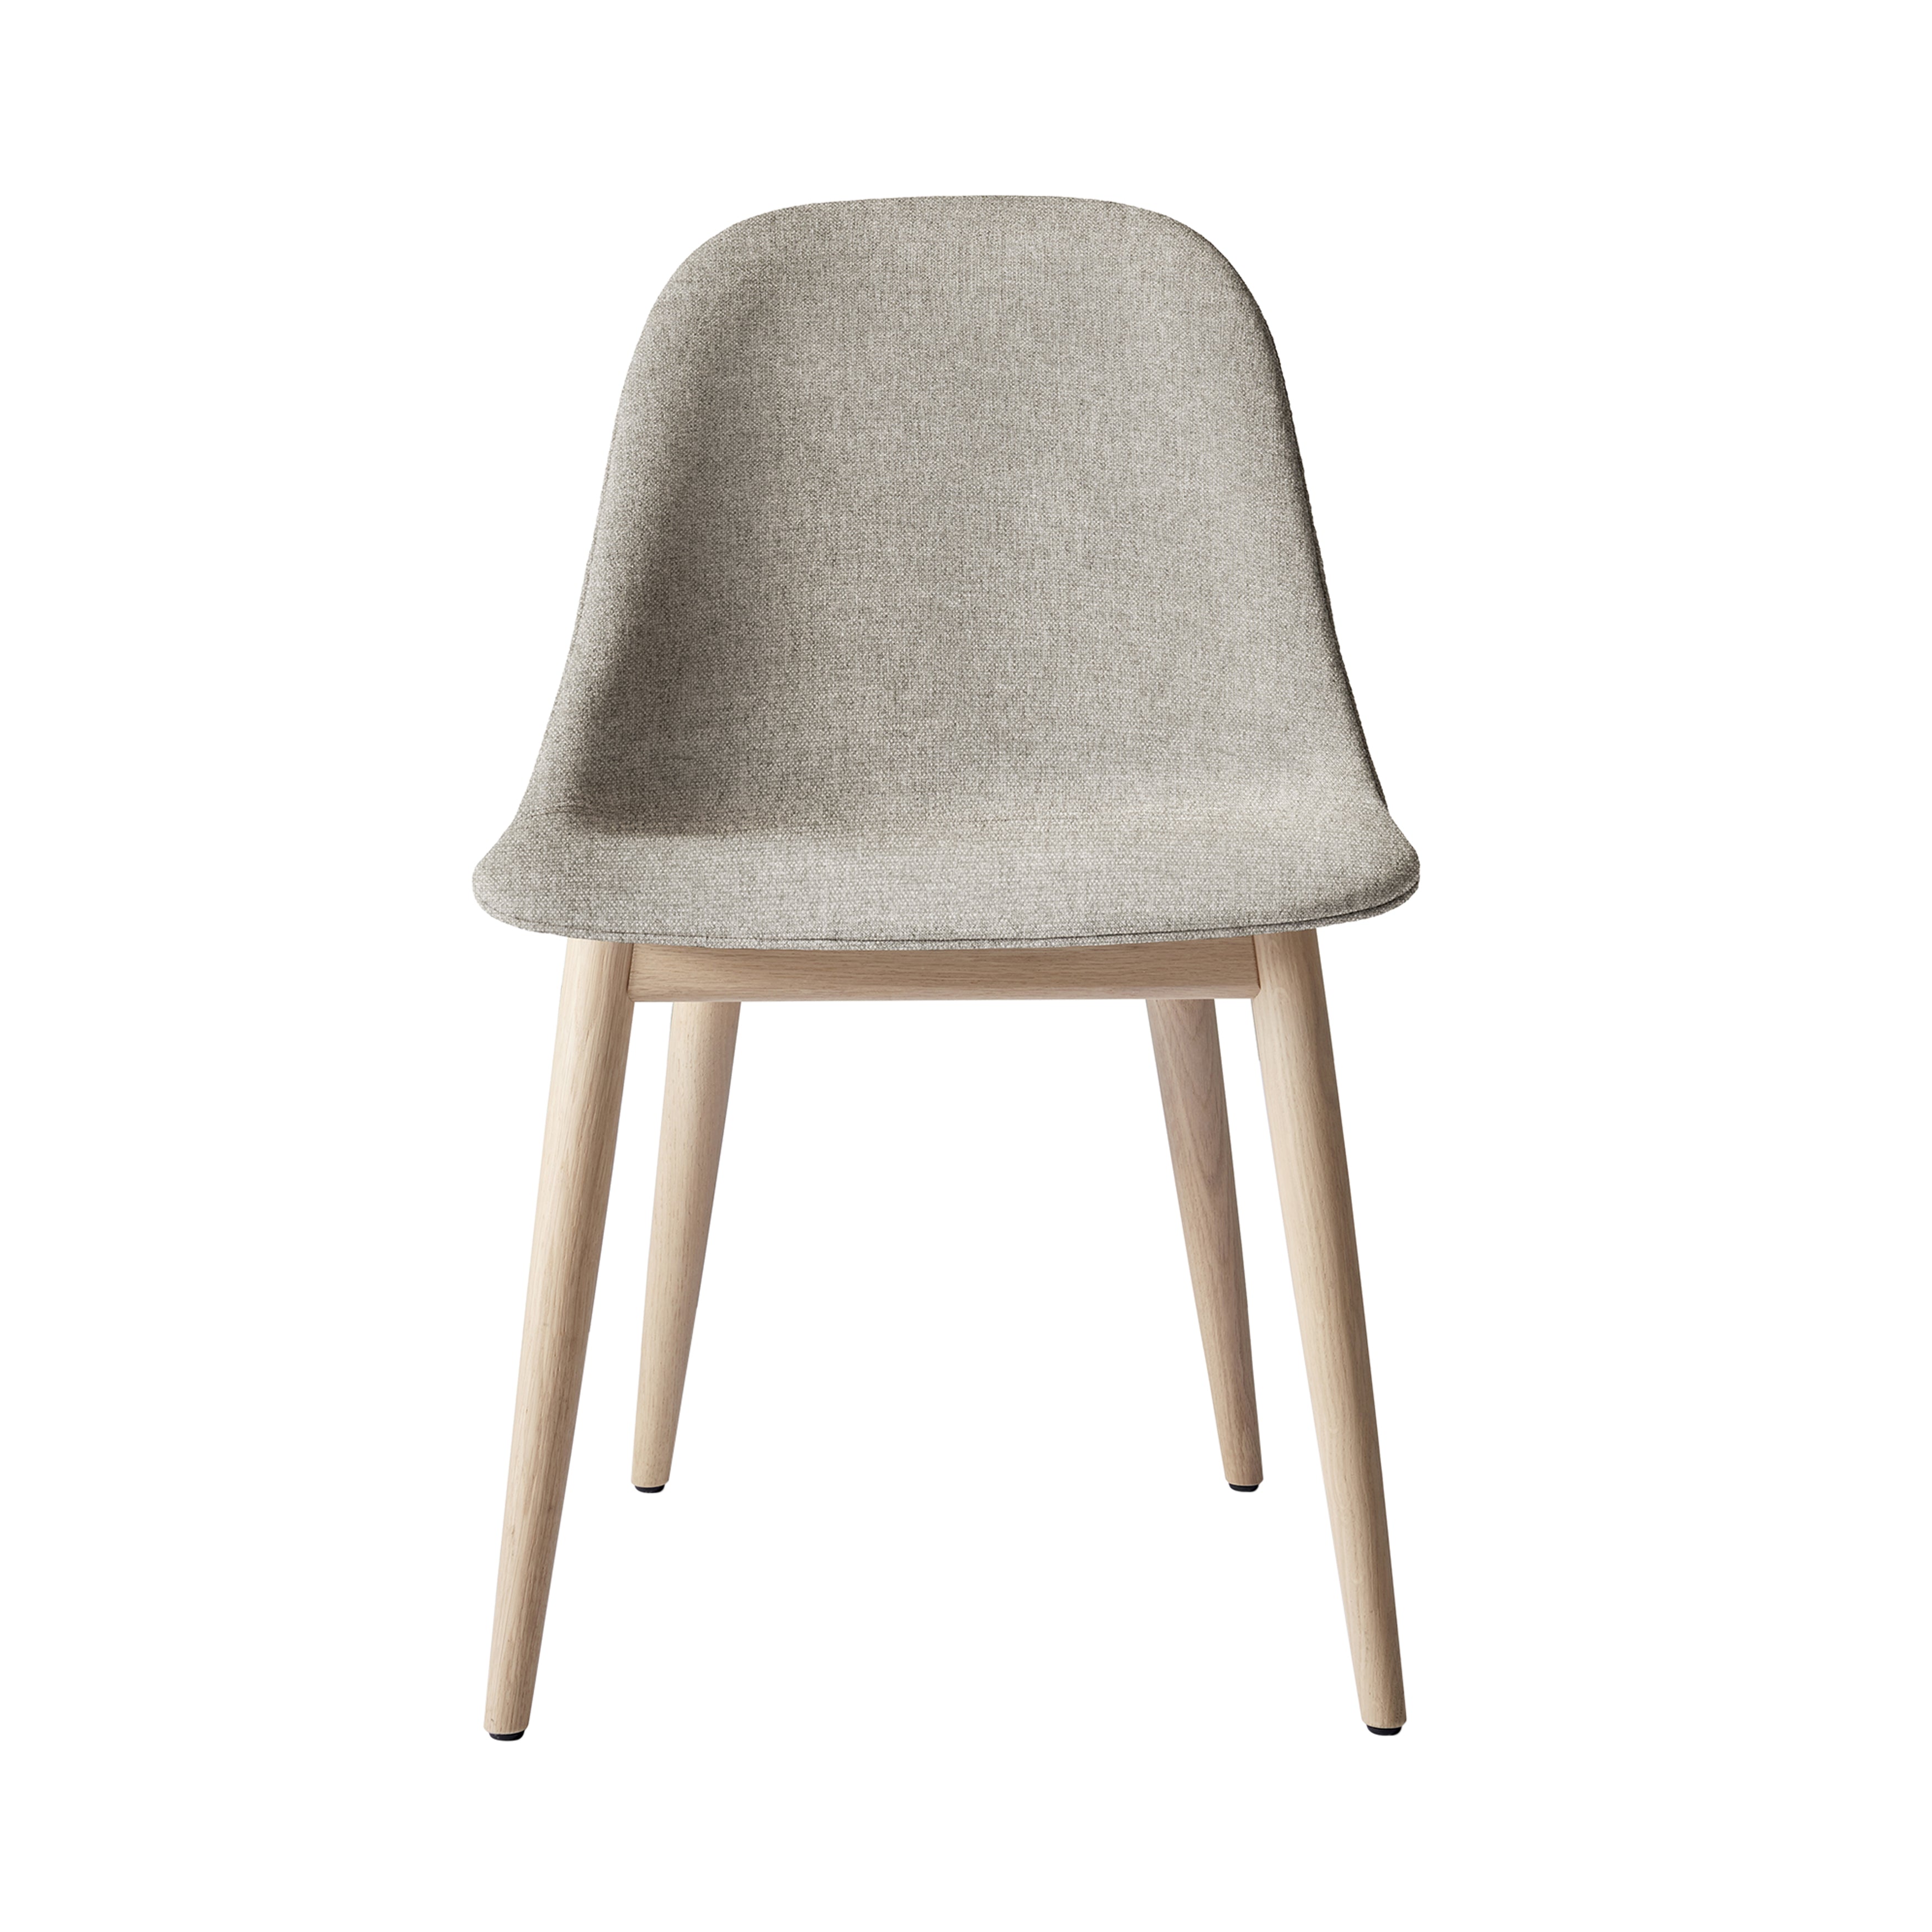 Harbour Side Chair: Wood Base Upholstered + Natural Oak